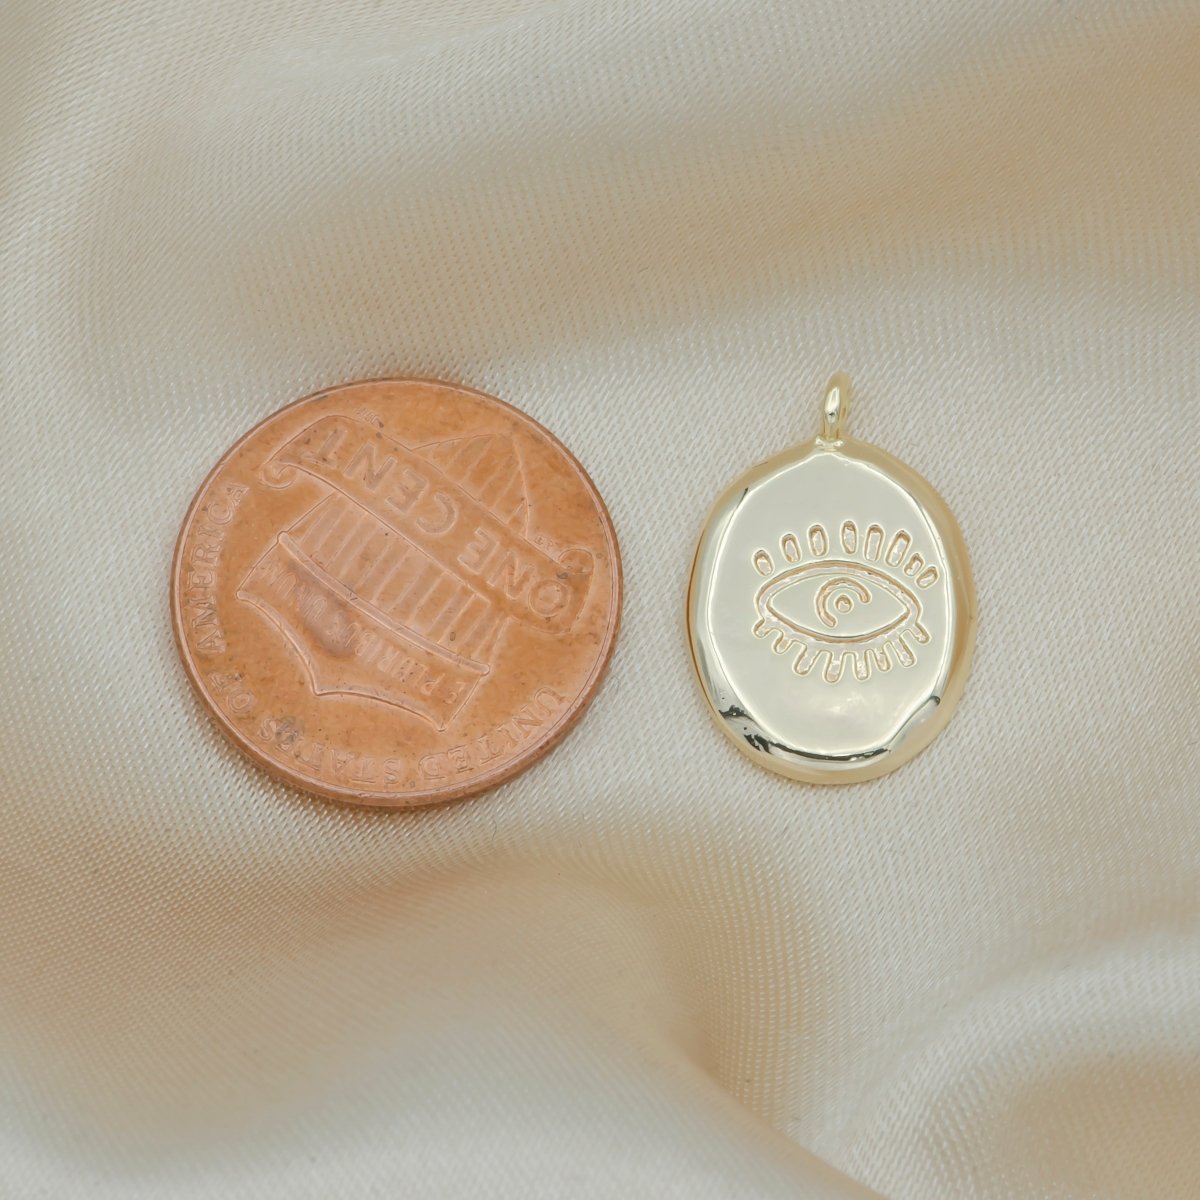 Evil Eye Ornament in Golden Oval Rustic Coin Charm, Gold Plated Evil Eye on Geometric Shape Medallion Charm Pendant GP-134 - DLUXCA